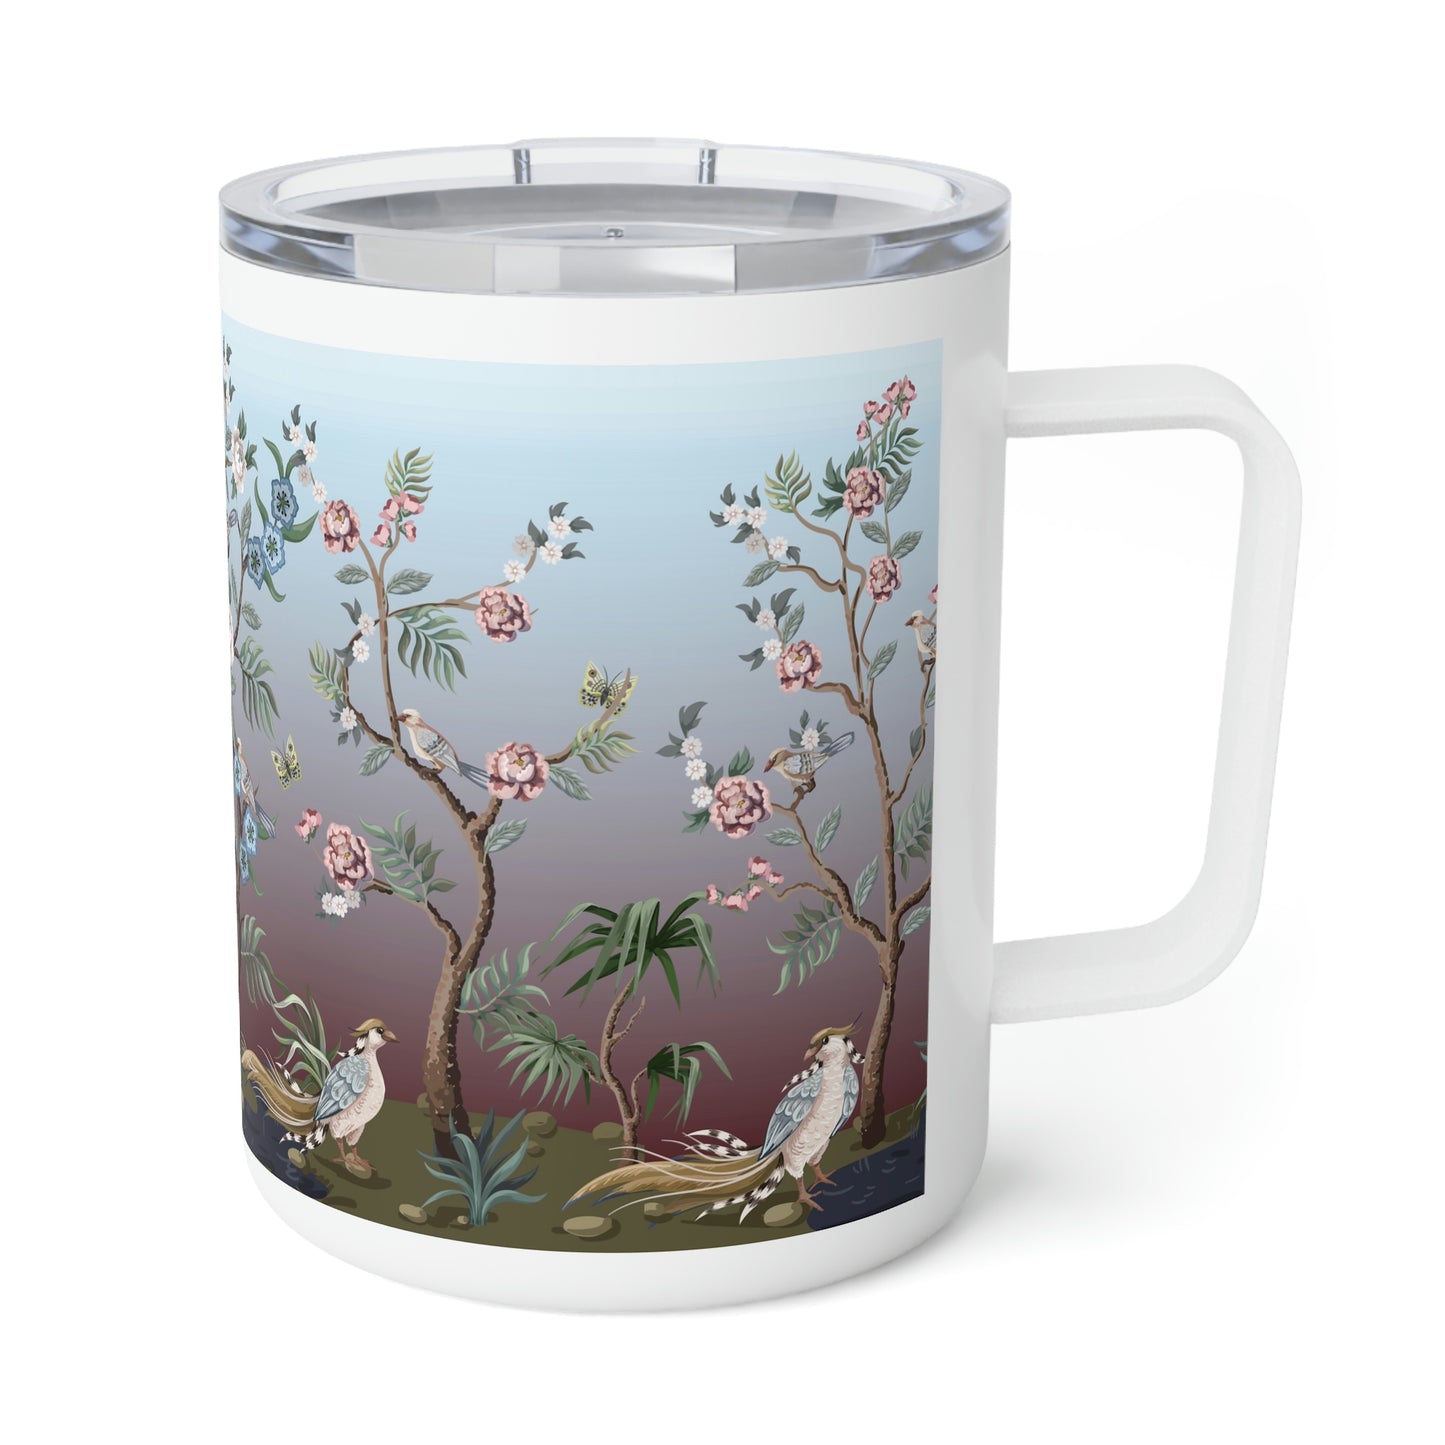 Chinoiserie Herons and Peonies Insulated Coffee Mug, 10oz